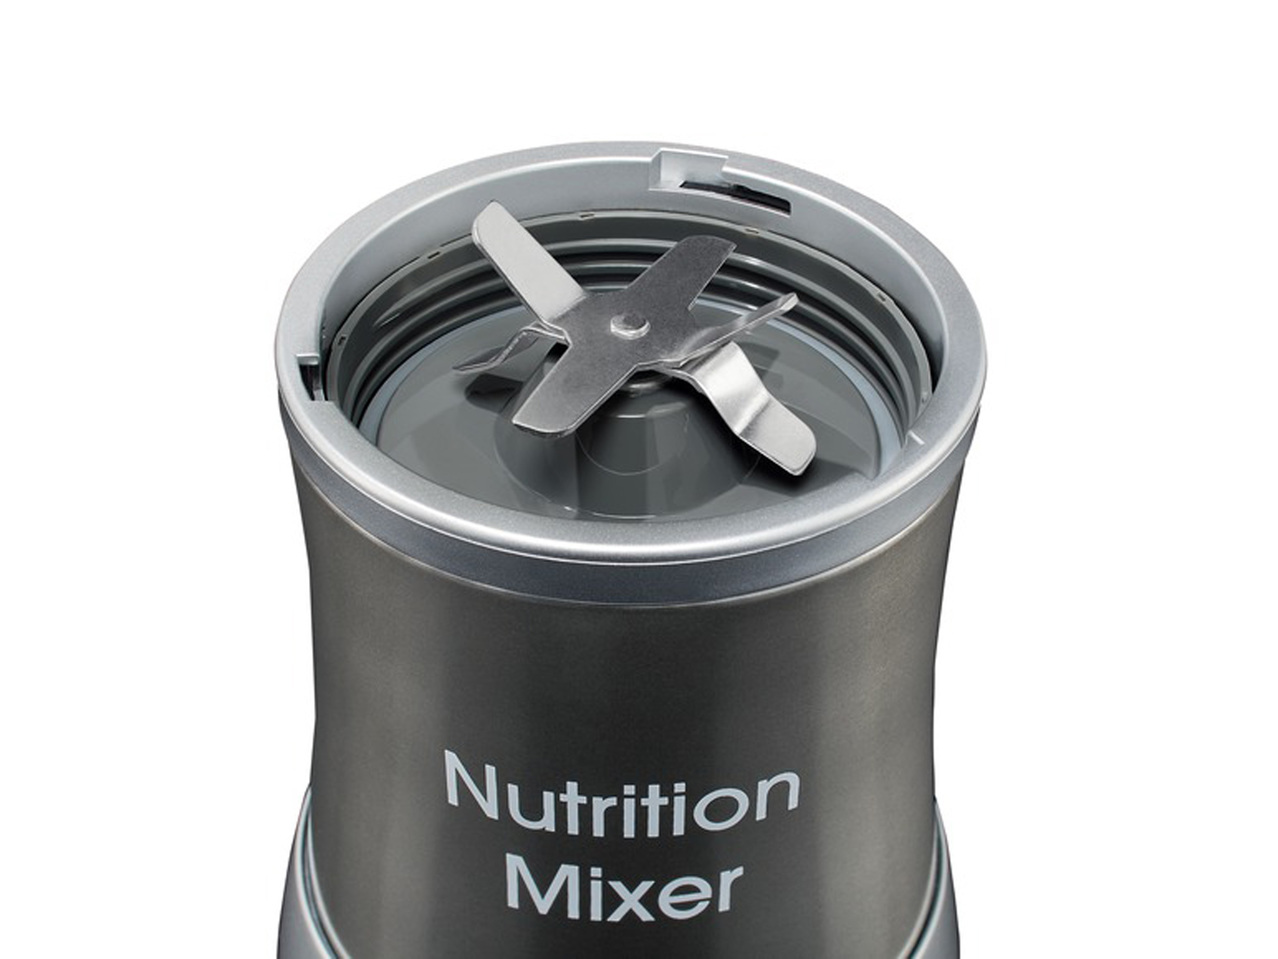 Nutrition Mixer